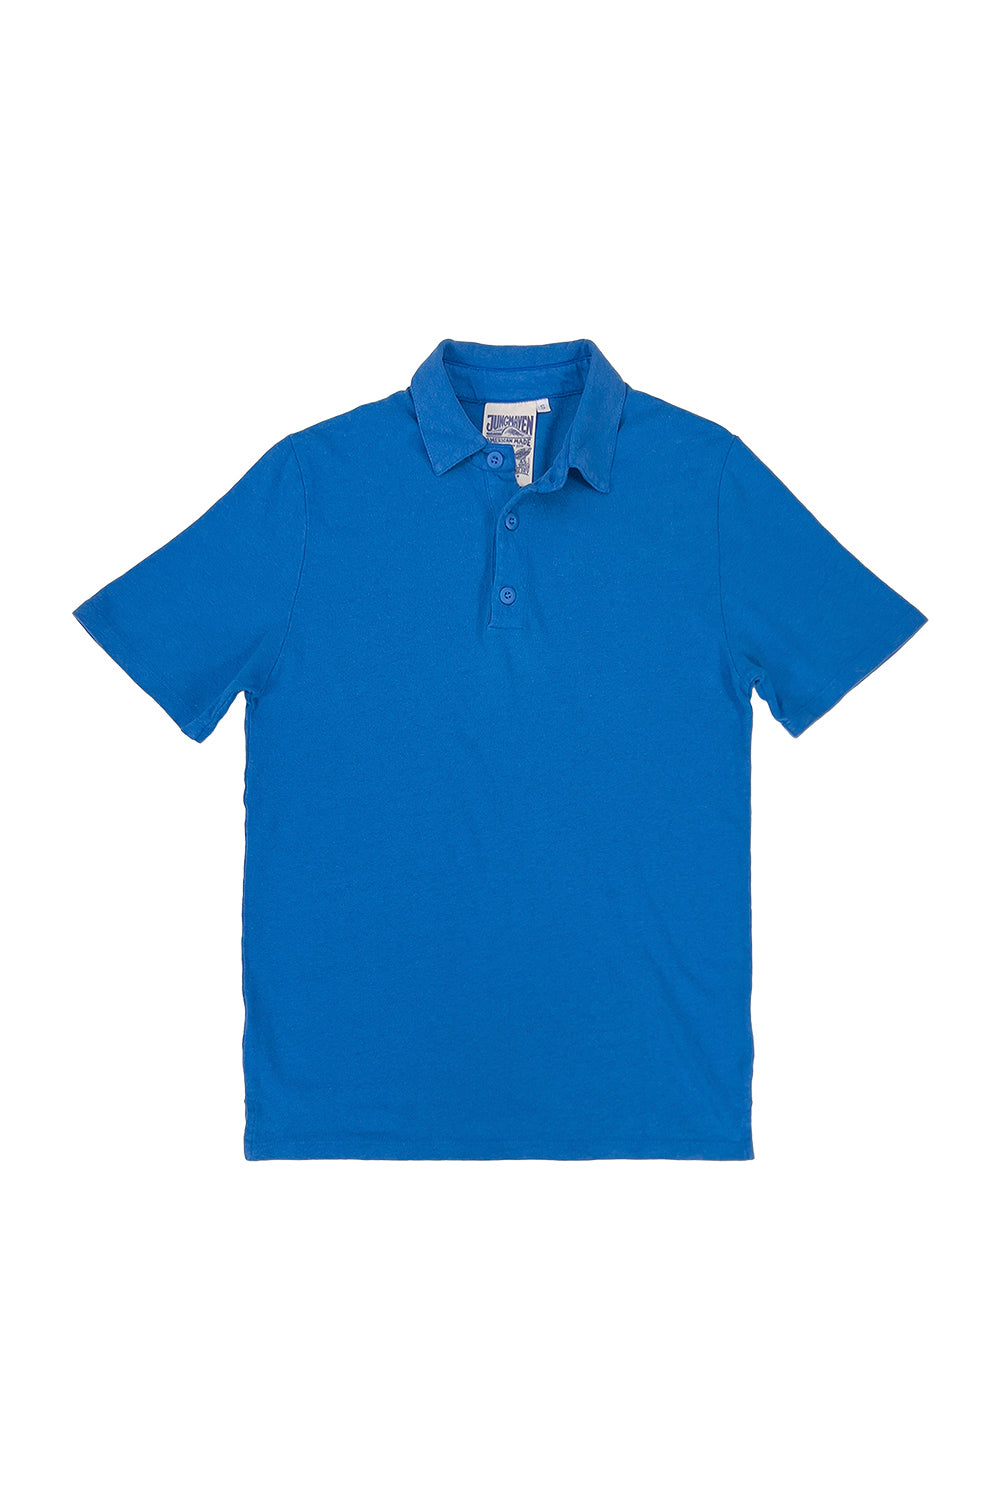 Preston Polo Shirt | Jungmaven Hemp Clothing & Accessories / Color: Galaxy Blue